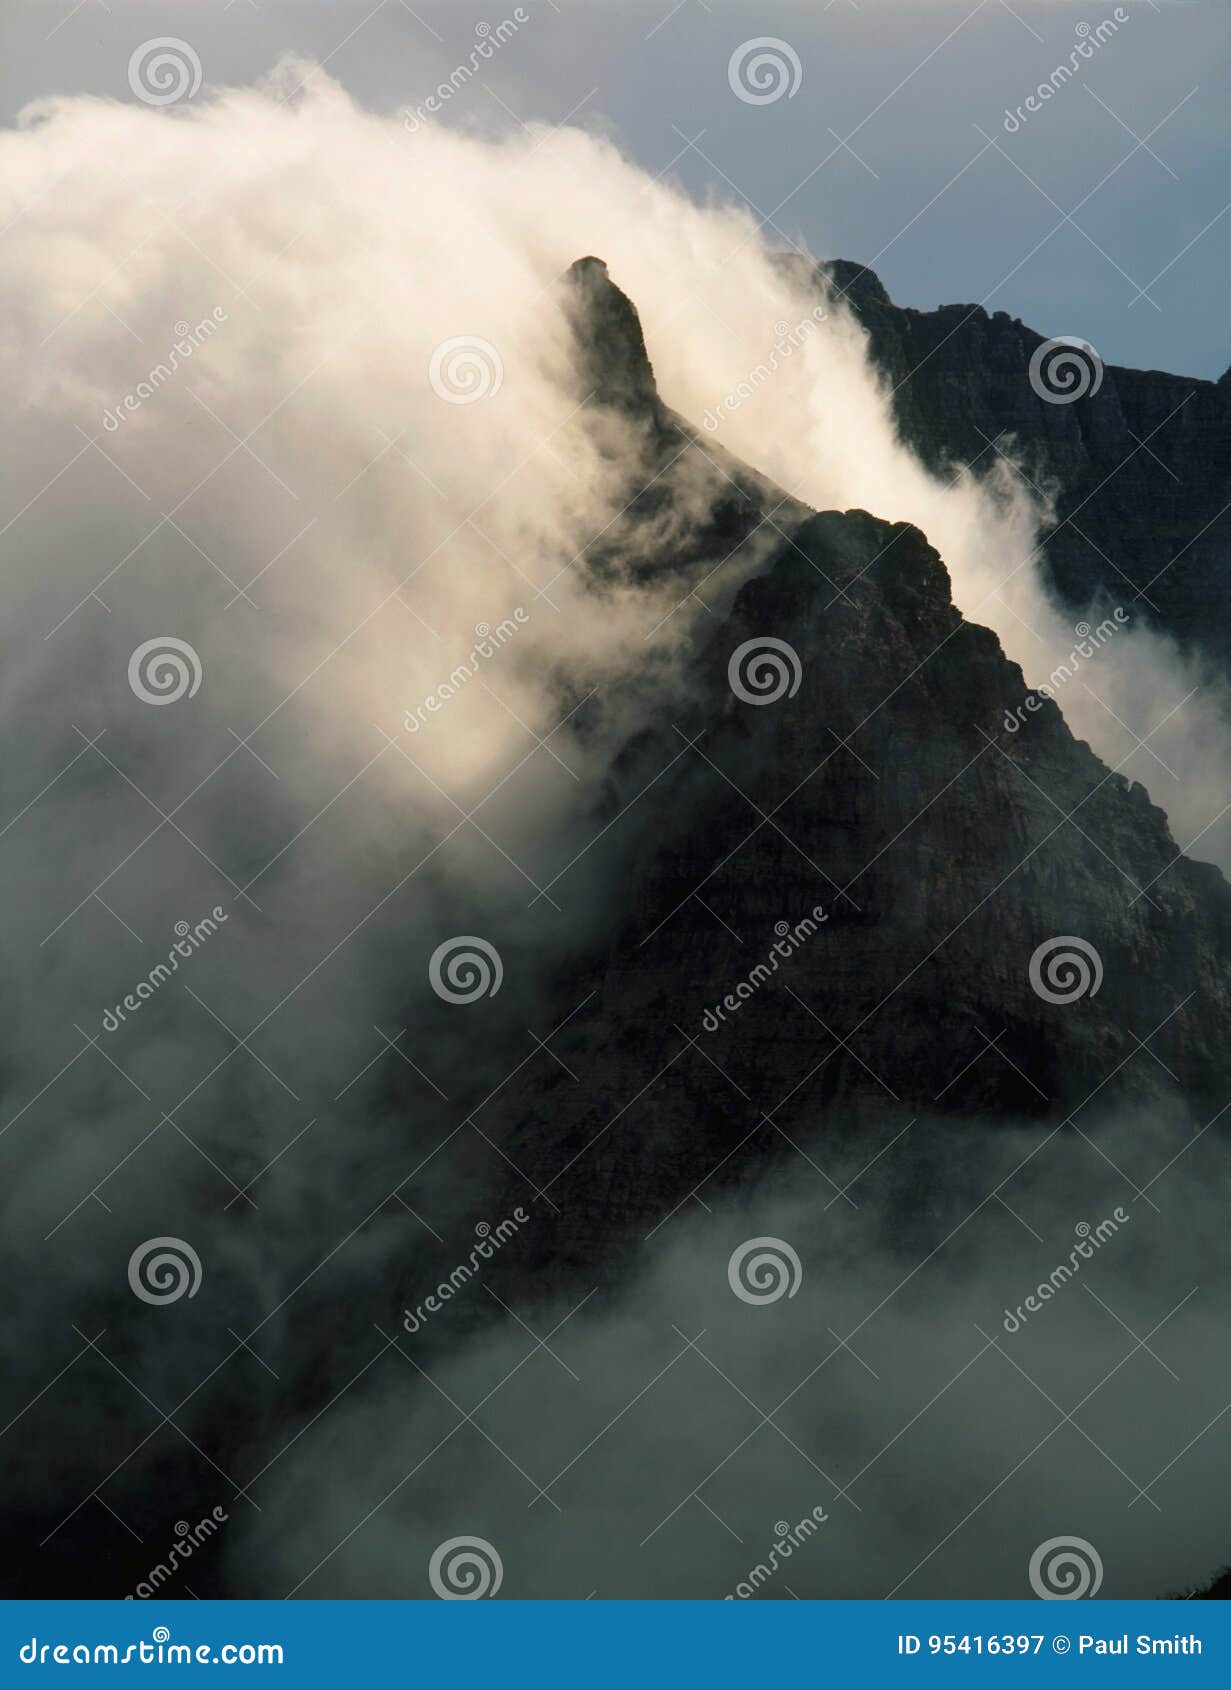 clouds smothering peaks of the lewis range, highline trail, glacier national park, montana